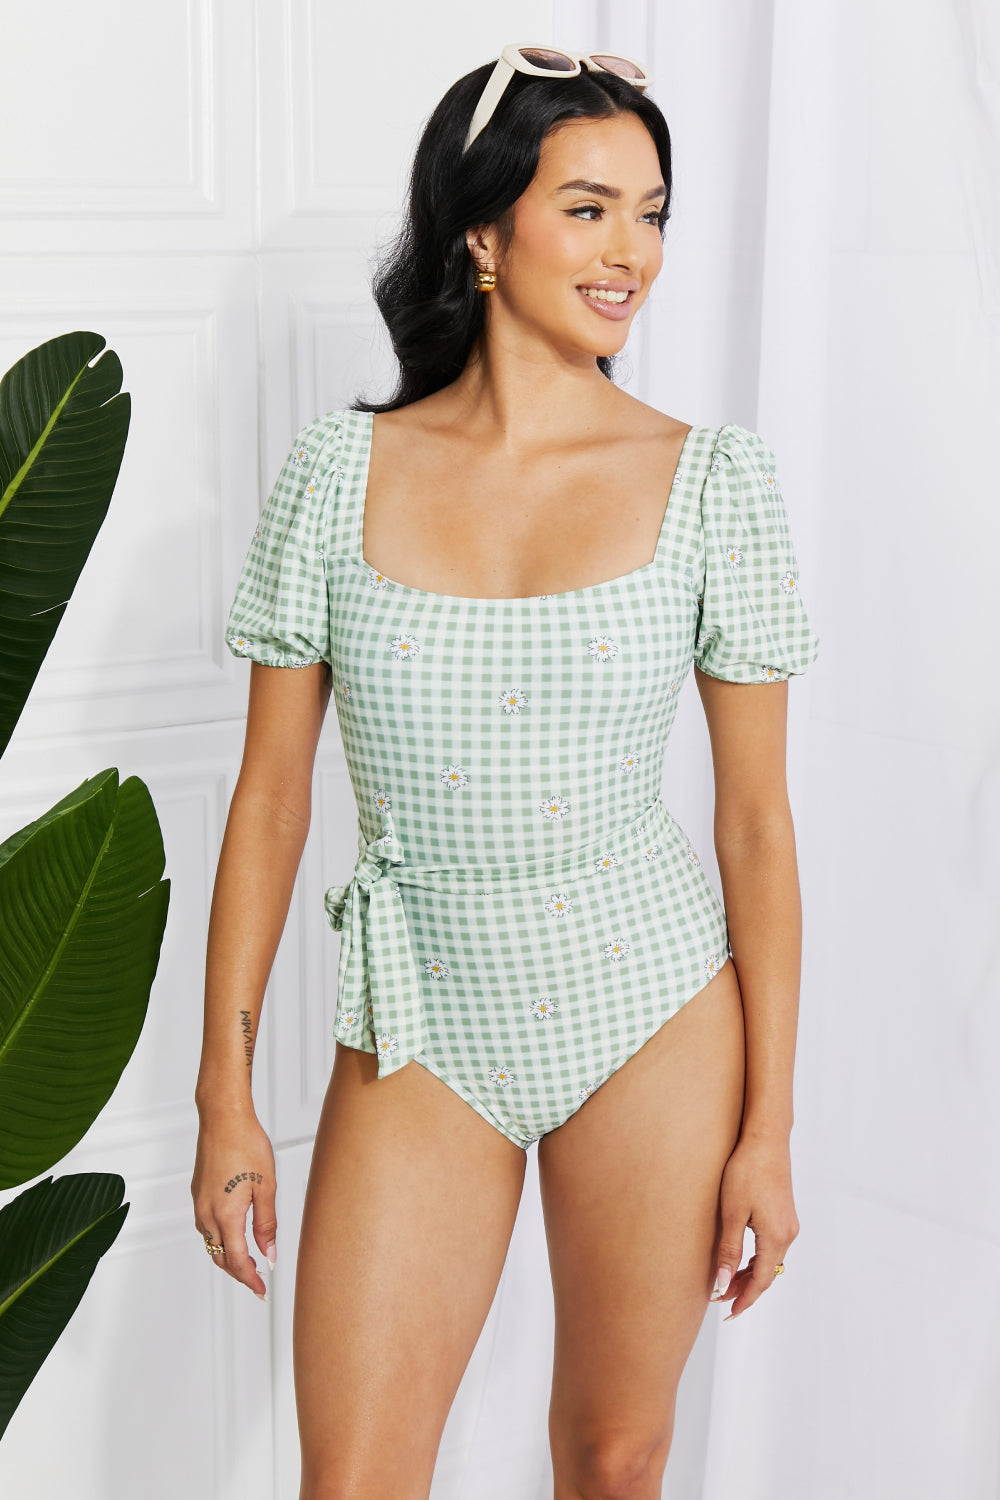 Marina West Swim Salty Air Puff Sleeve One-Piece in Sage Gum Leaf S Swimwear by Vim&Vigor | Vim&Vigor Boutique